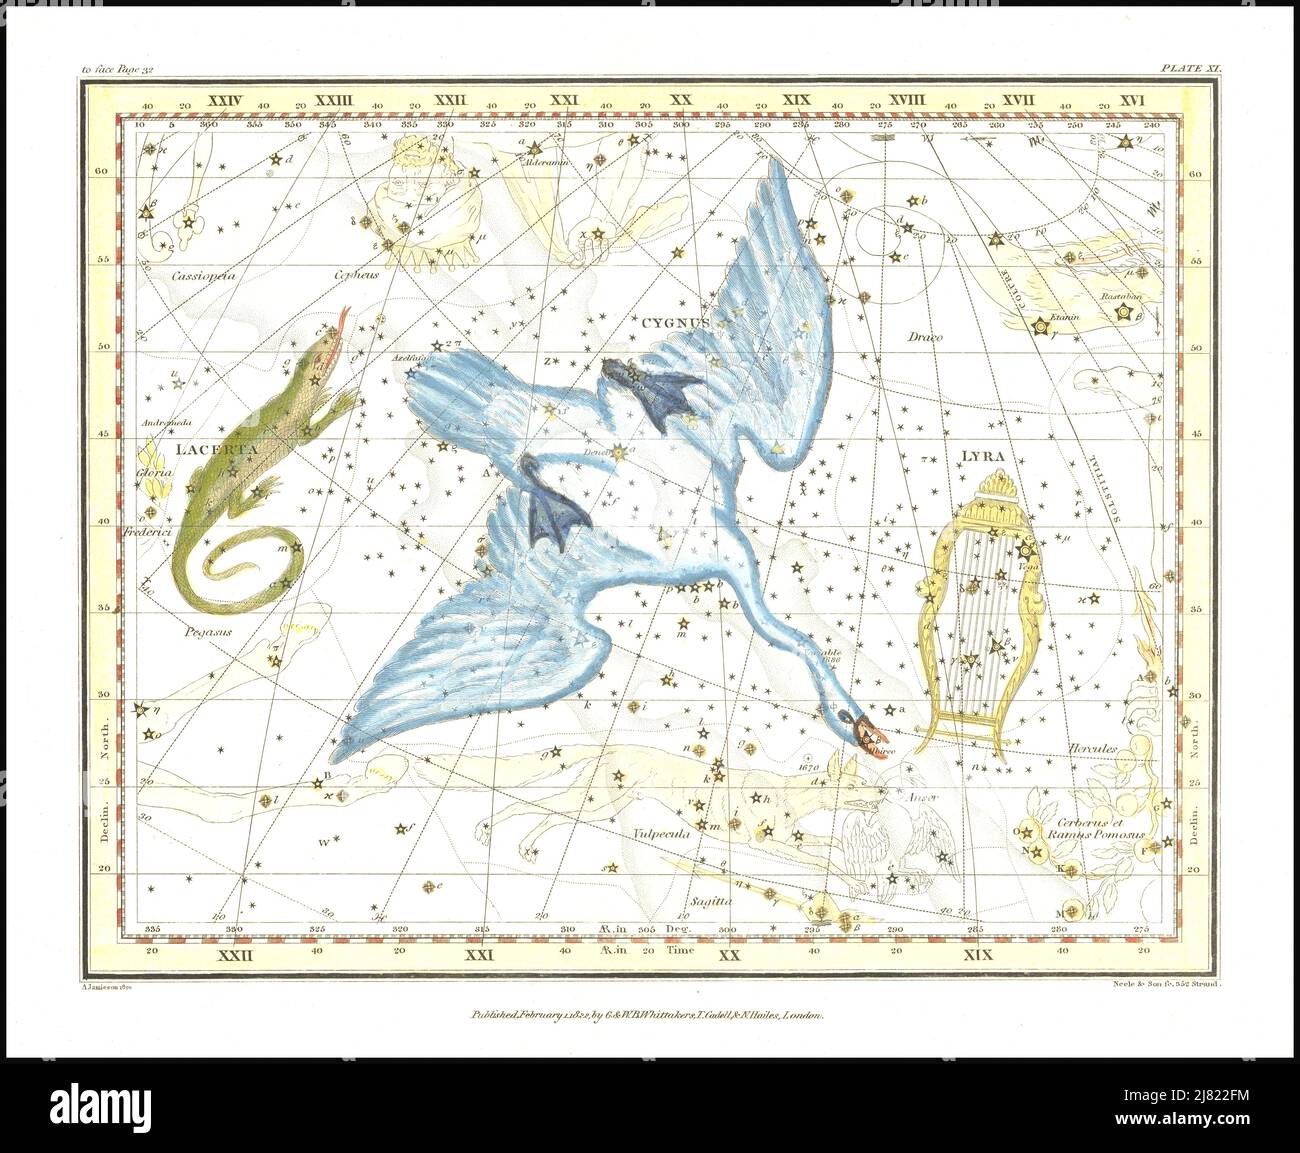 Alexander Jamieson - Star chart showing the constellations Cygnus, Lyra and Lacerta - 1822 Stock Photo